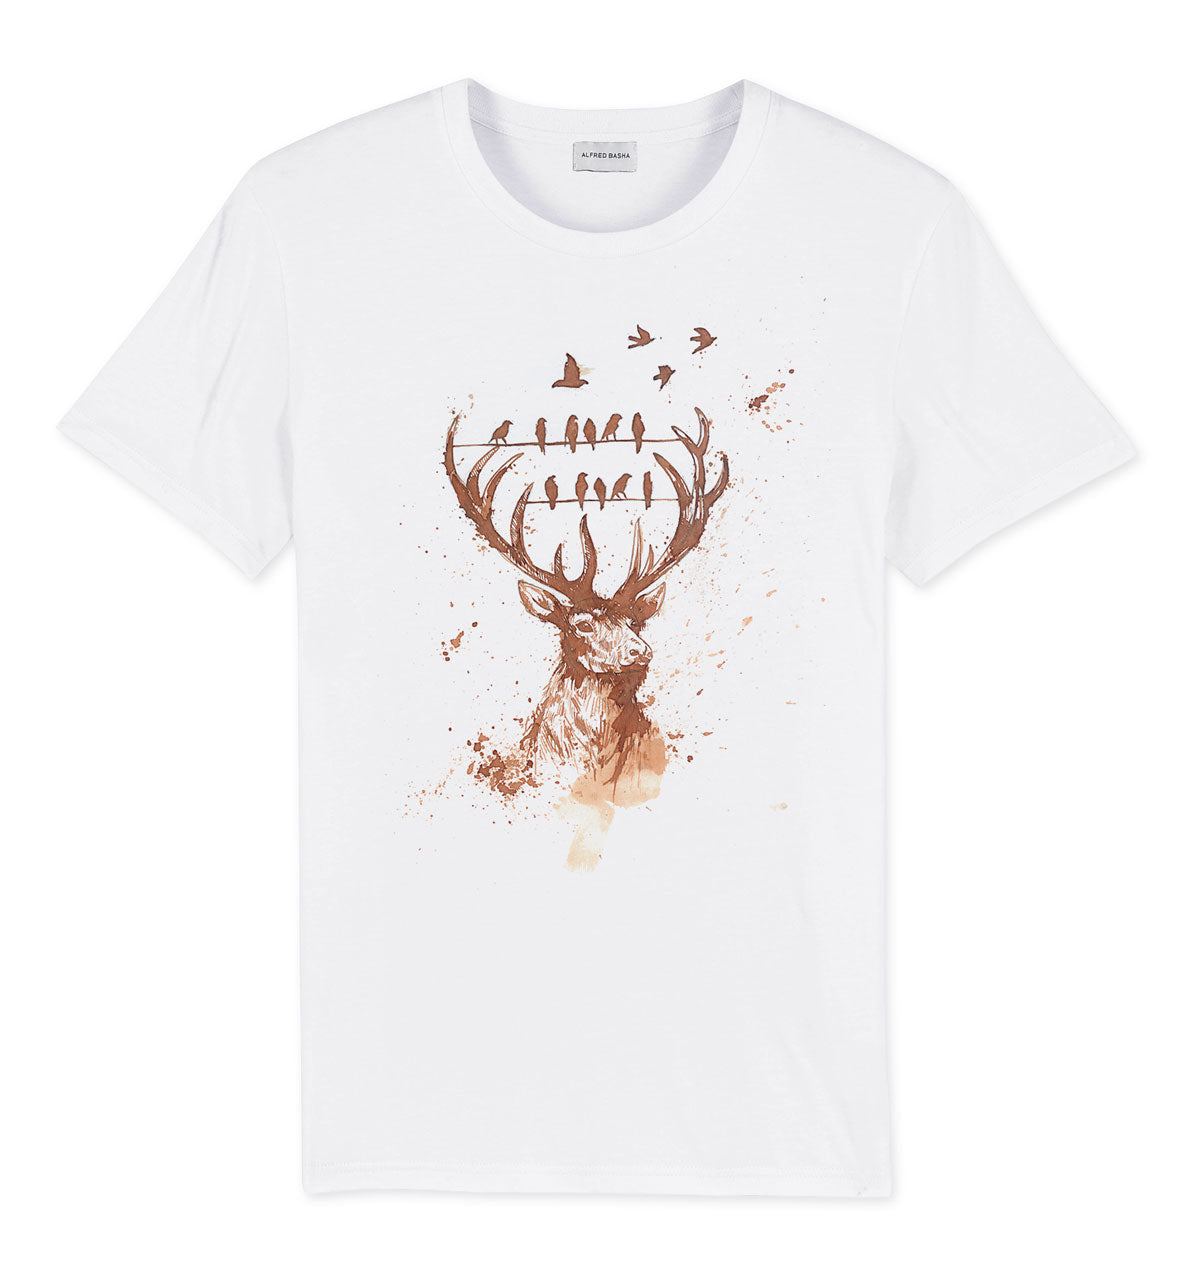 Coffee Deer man t-shirt